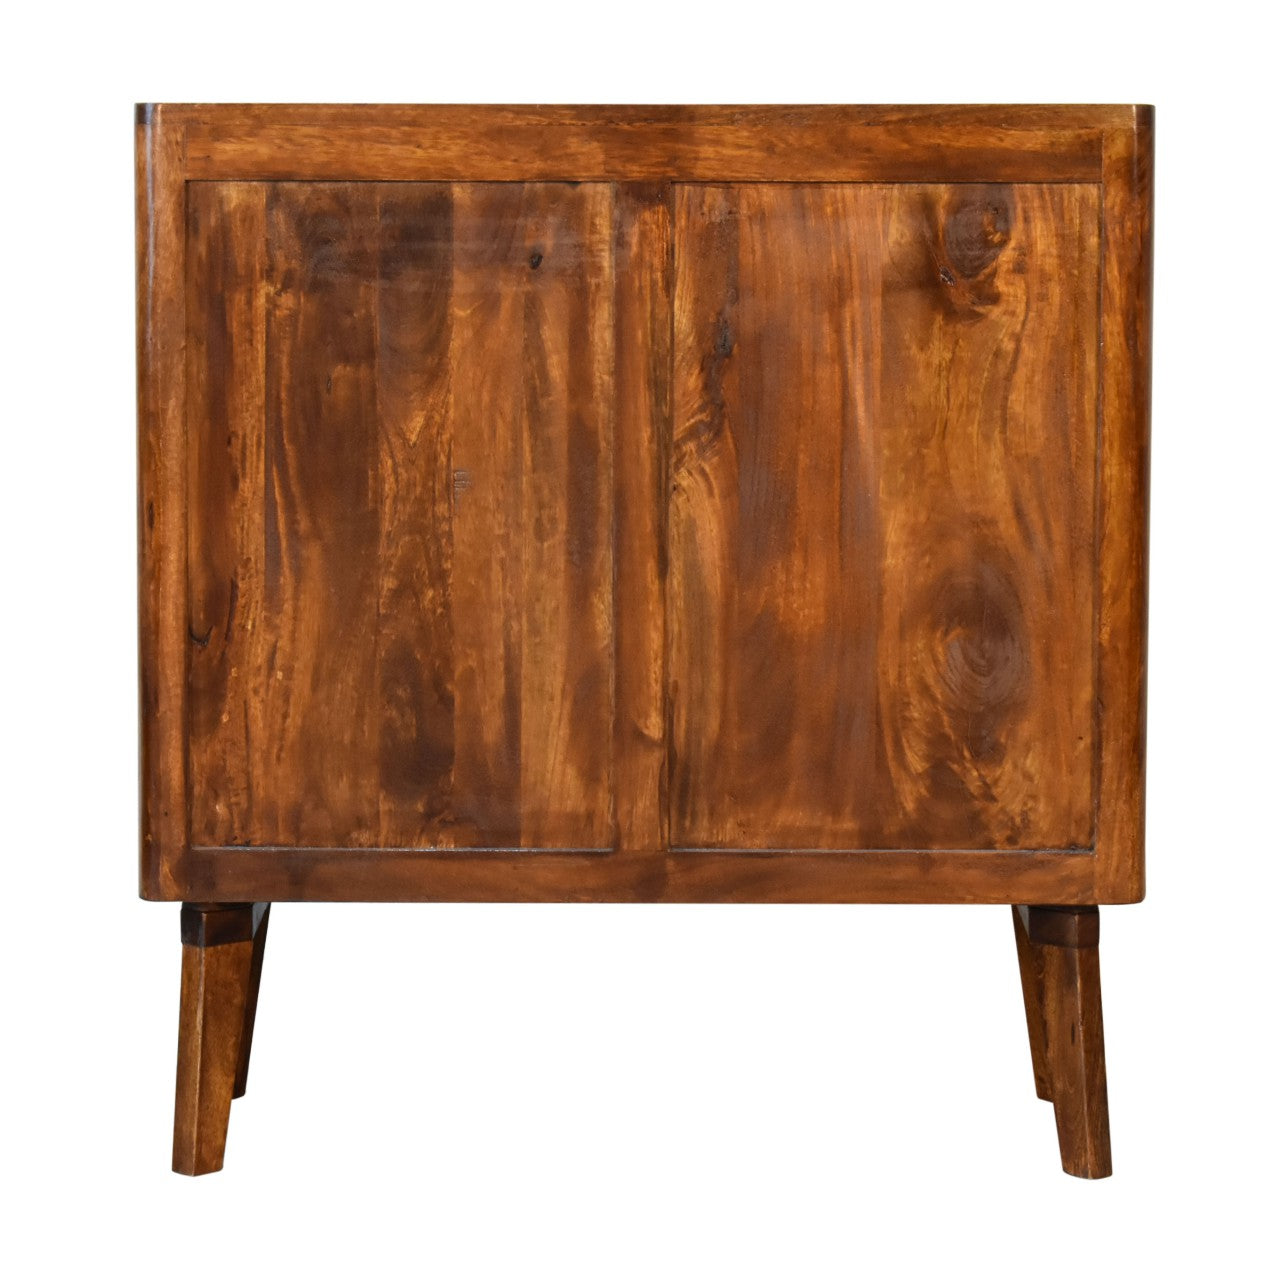 Ridge Edge Chestnut Solid Wood Cabinet